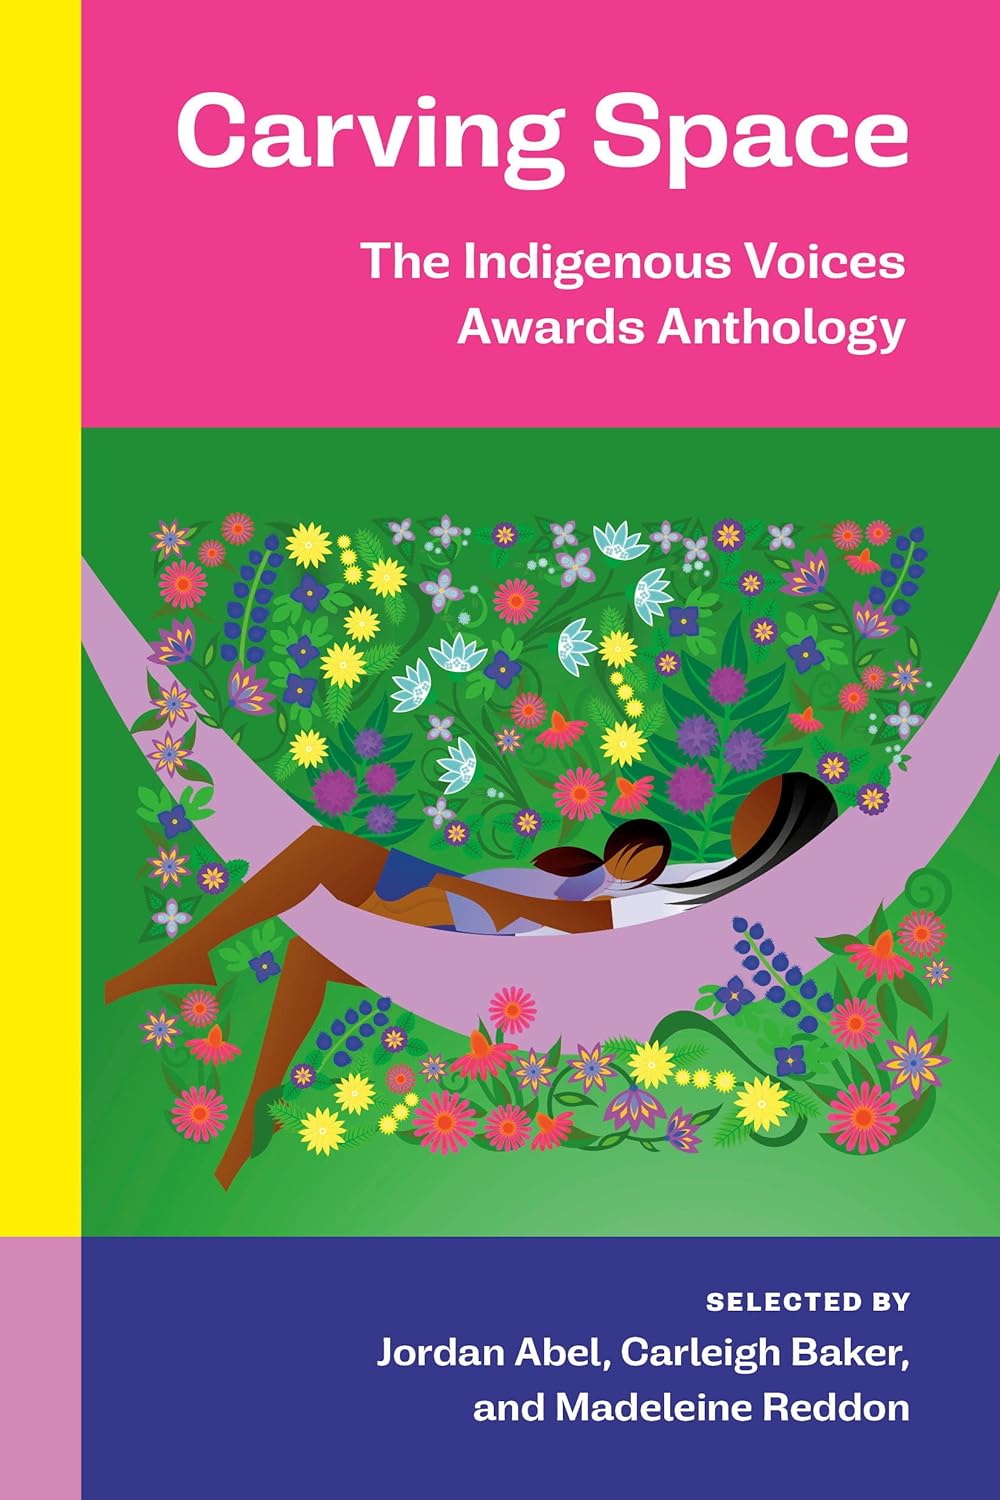 Carving Space: The Indigenous Voices Awards Anthology edited by Jordan Abel et. al